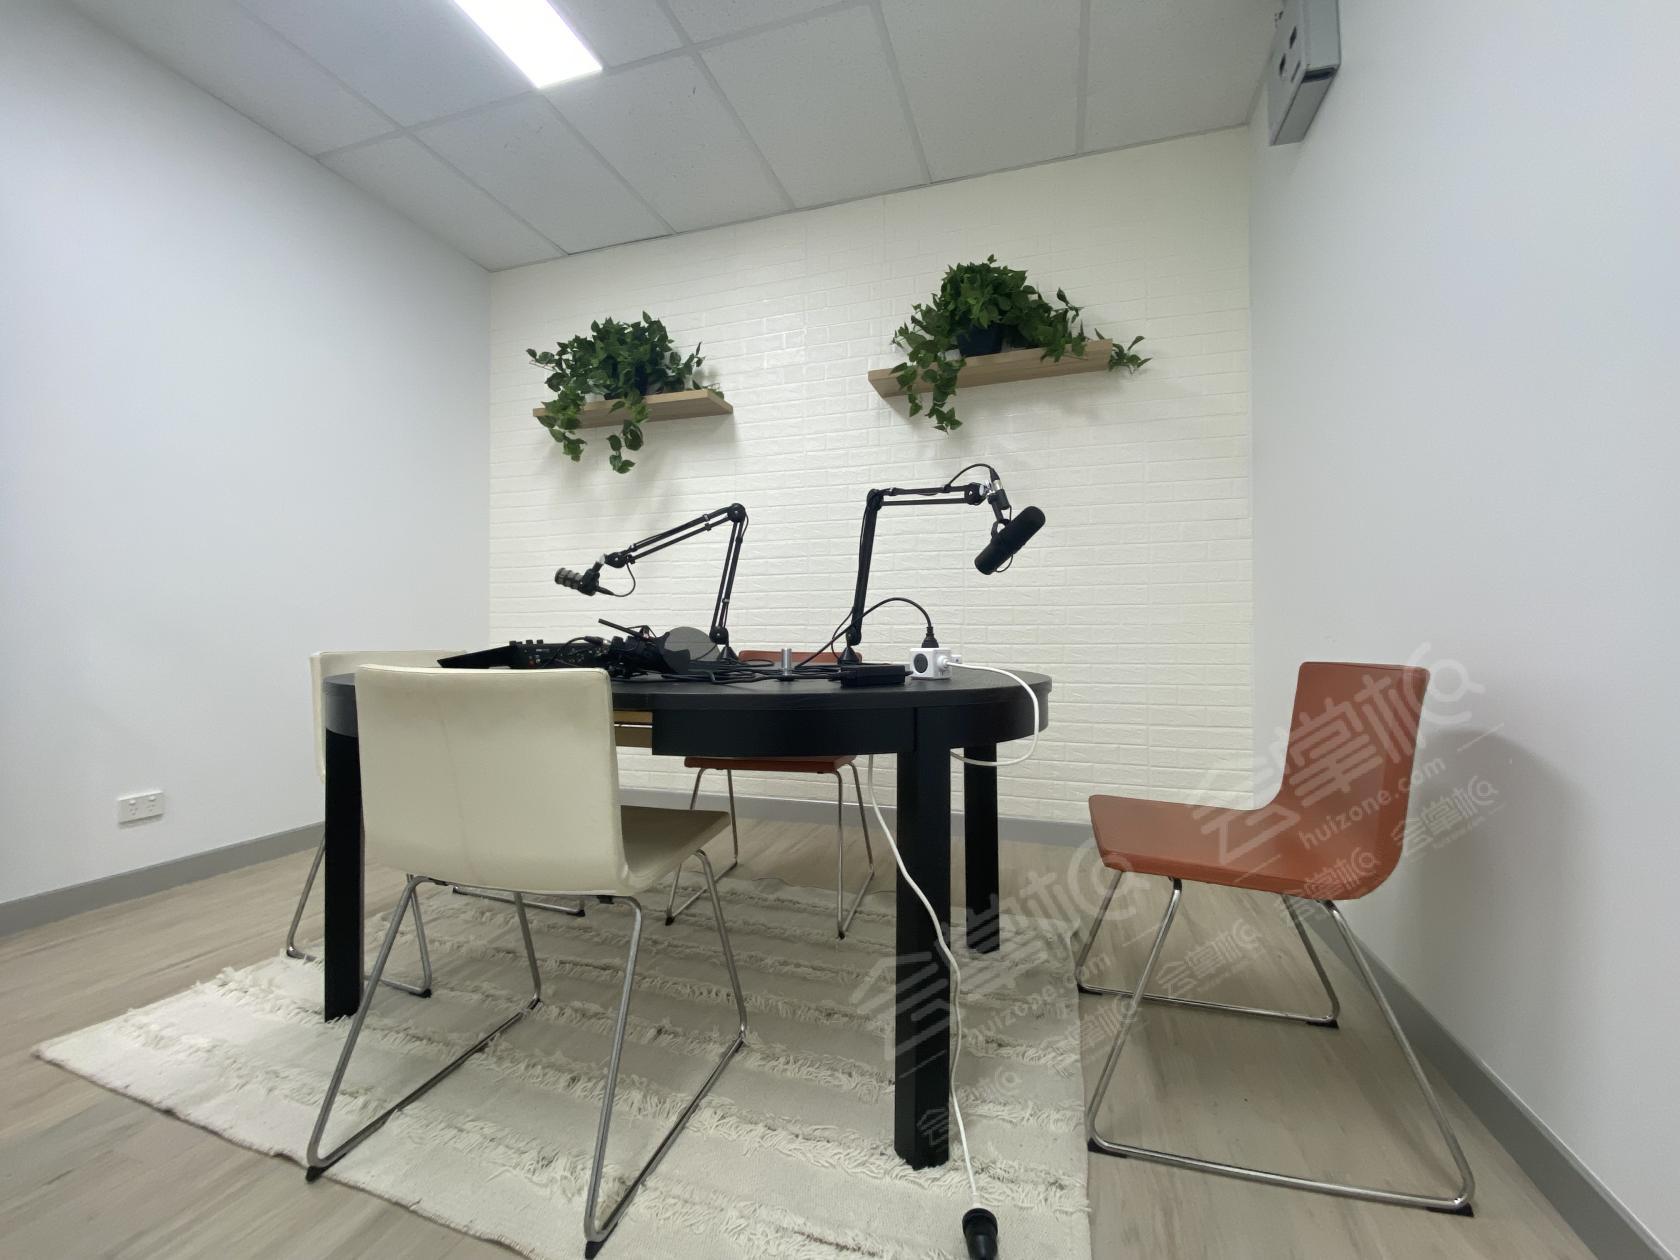 Podcast Recording Room